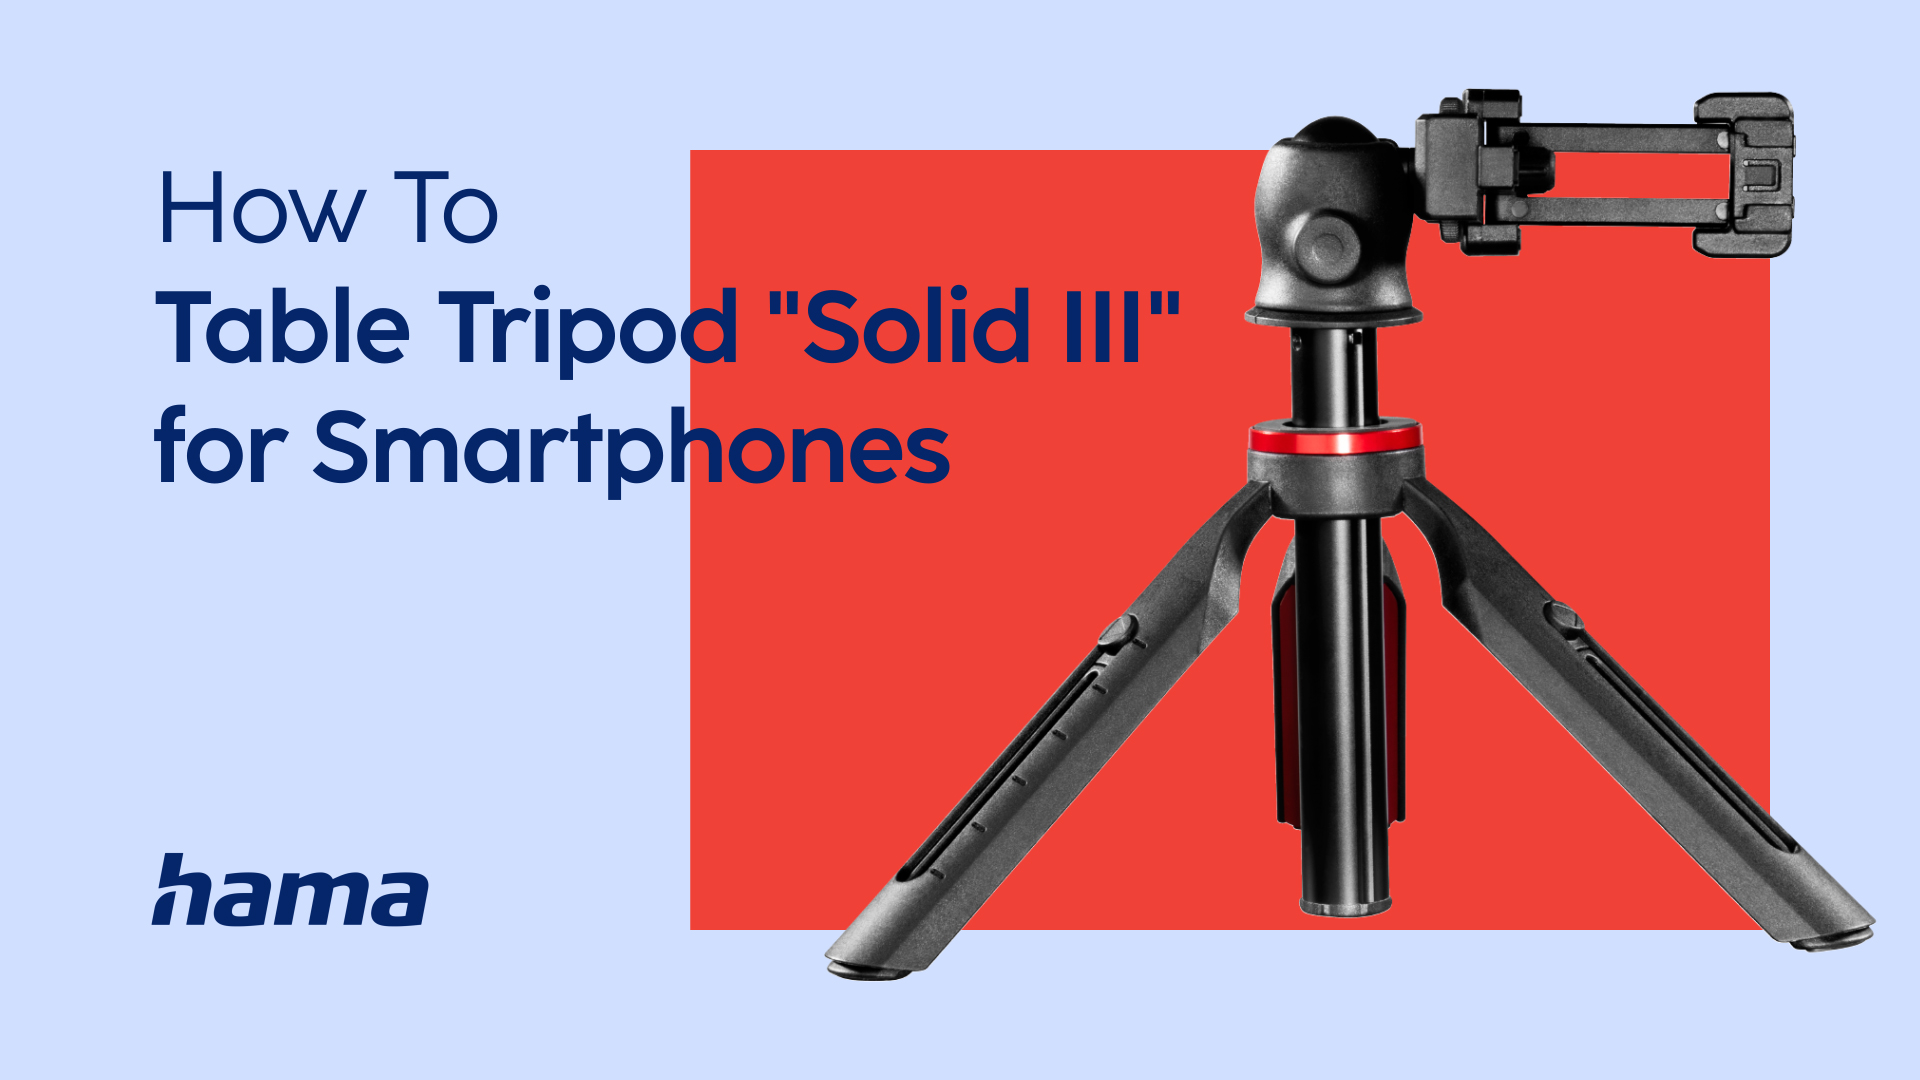 Hama Table Tripod "Solid III" for Smartphones